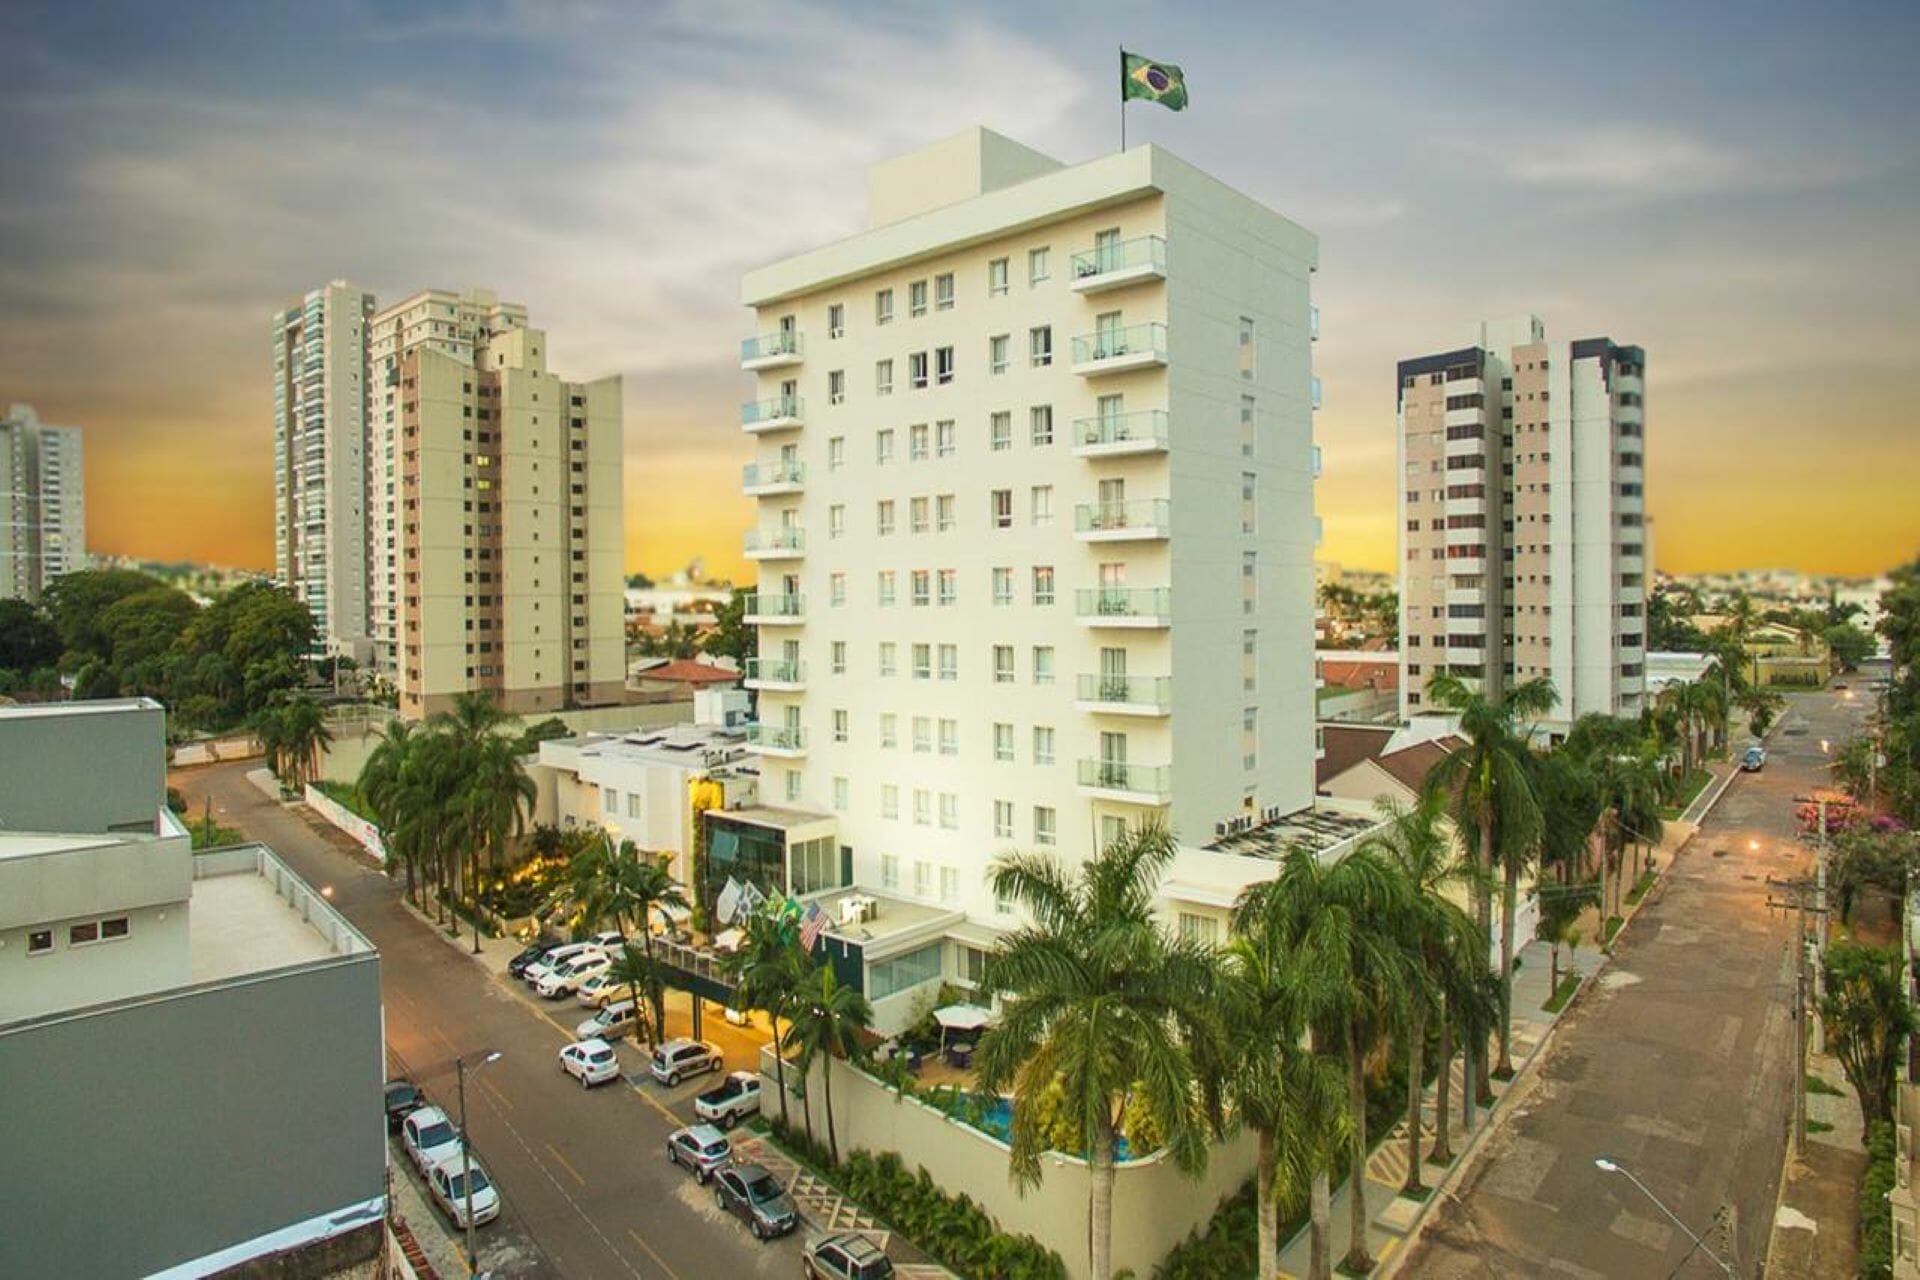 New Radisson Hotel in Anápolis, Brazil Opens